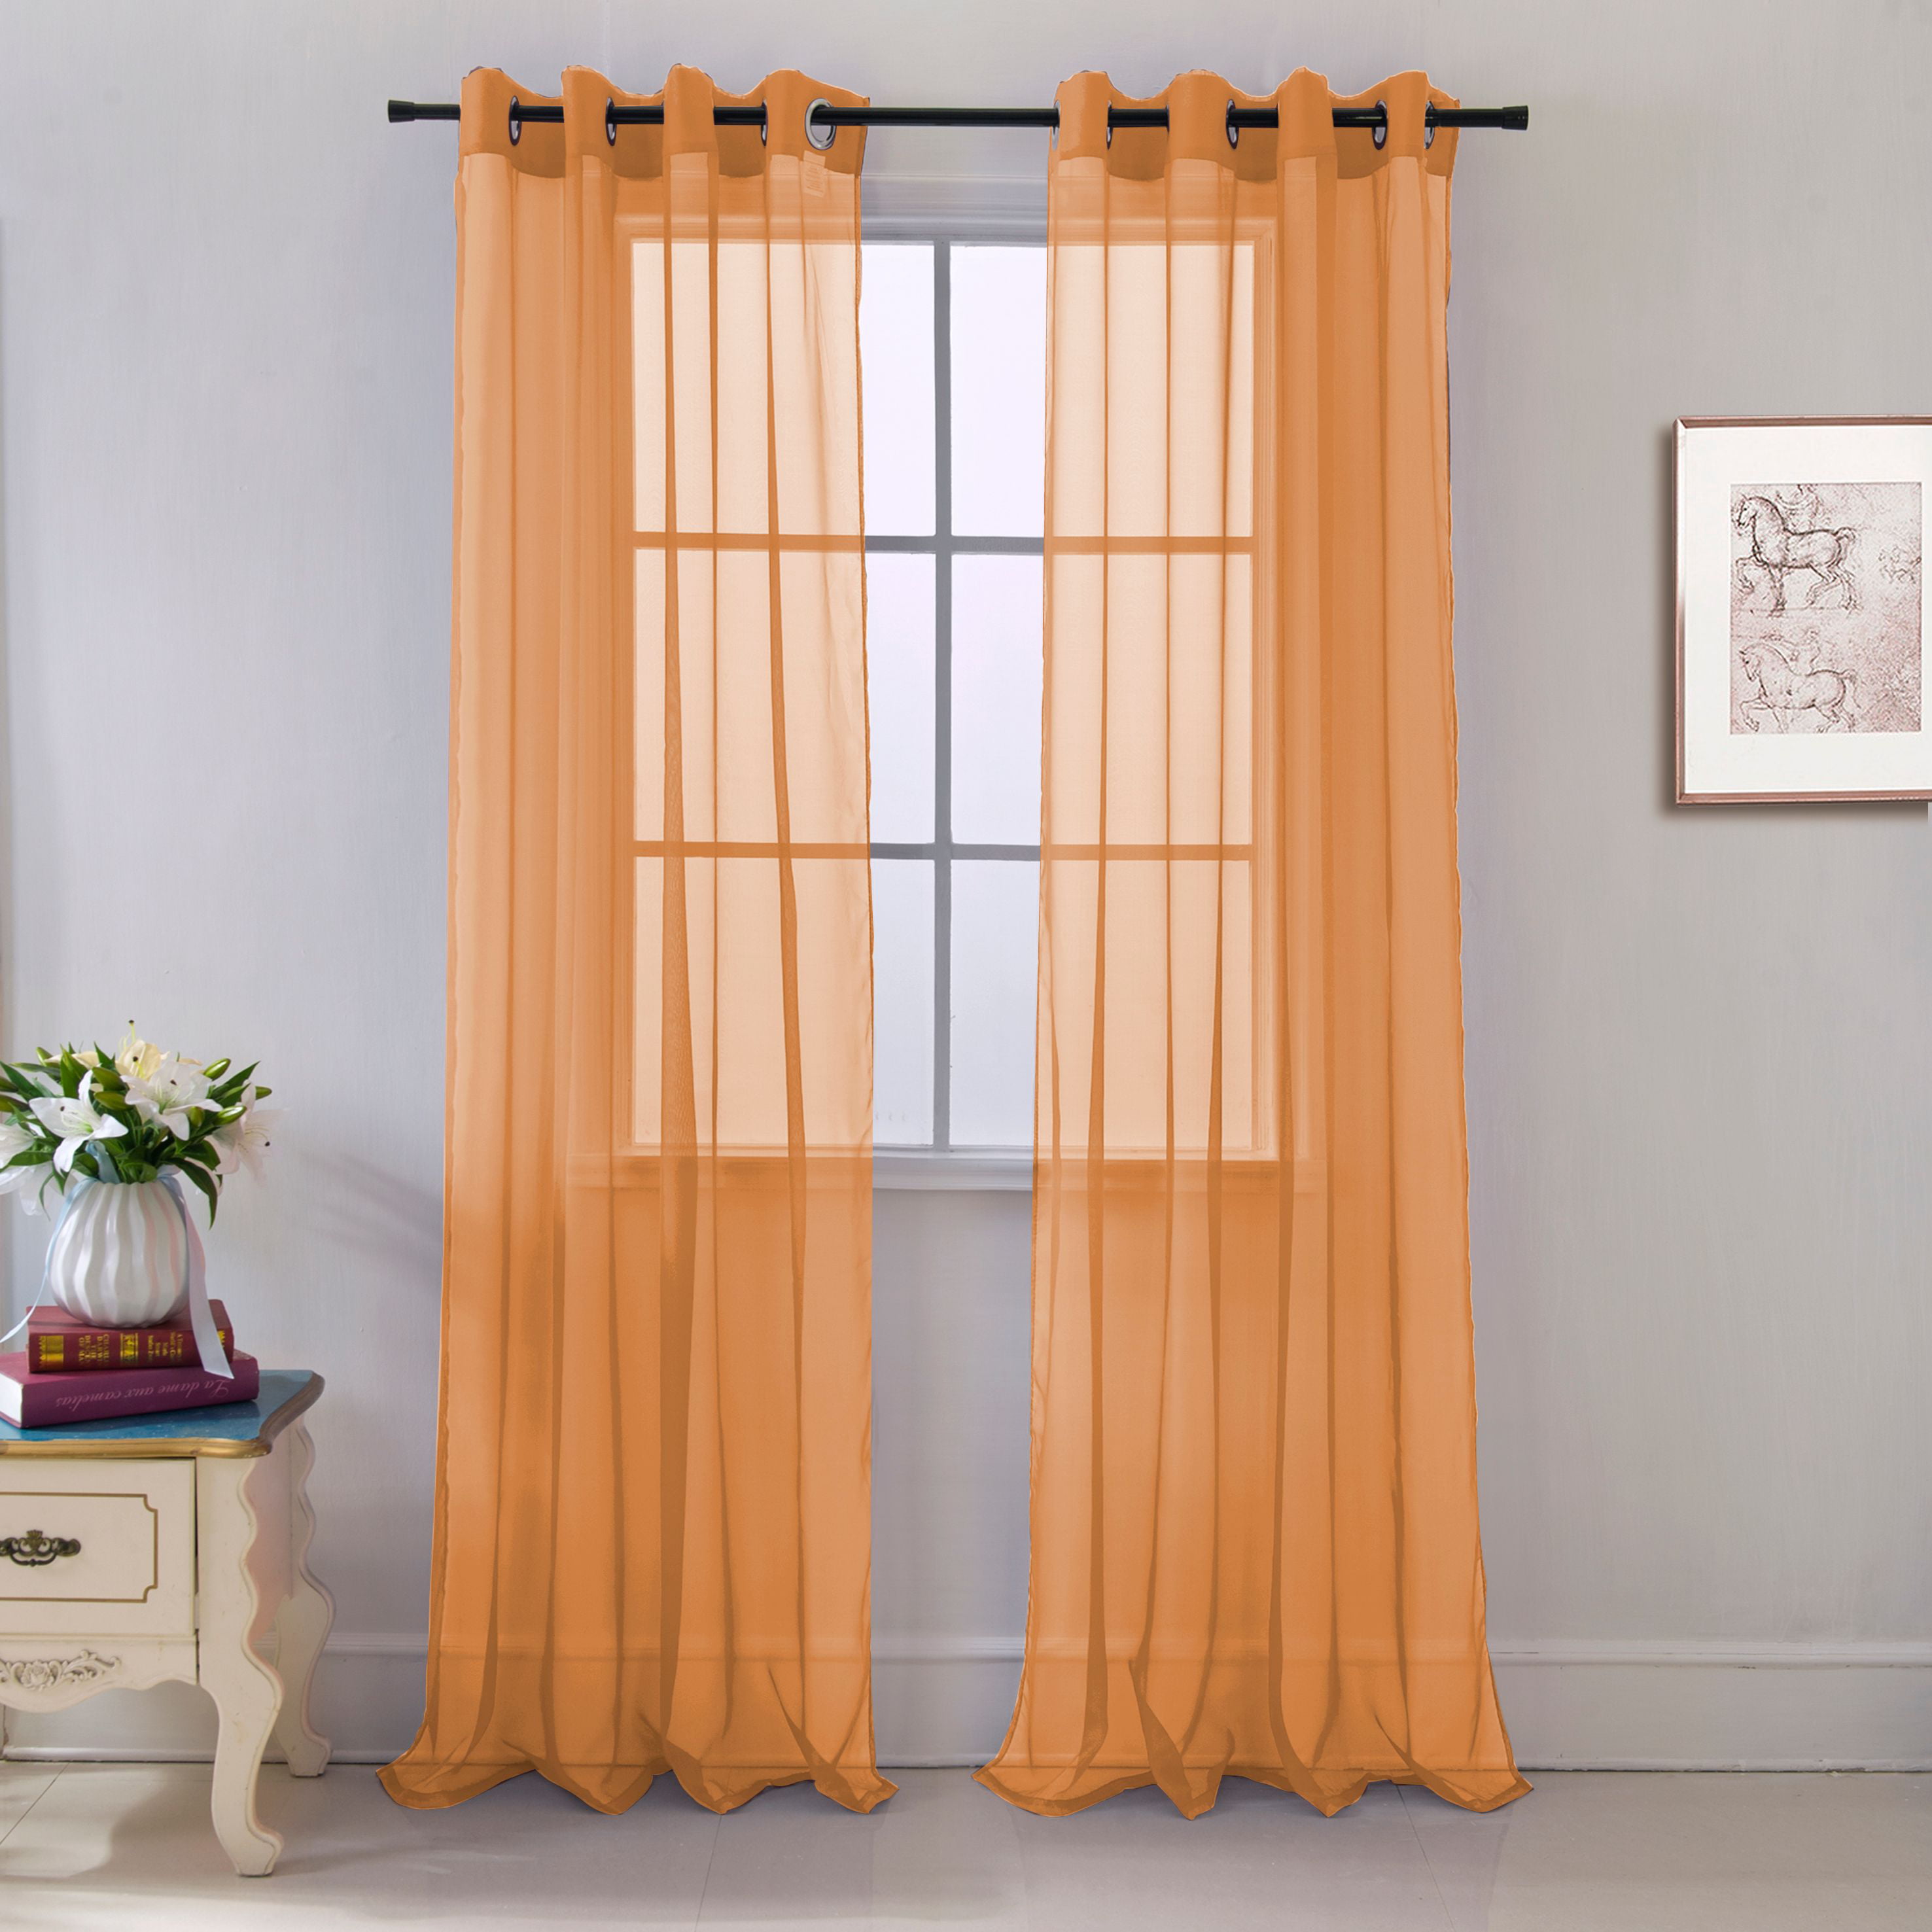 Cara Sheer Voile 54 x 84 in. Grommet Curtain Panel, Neon Orange ...